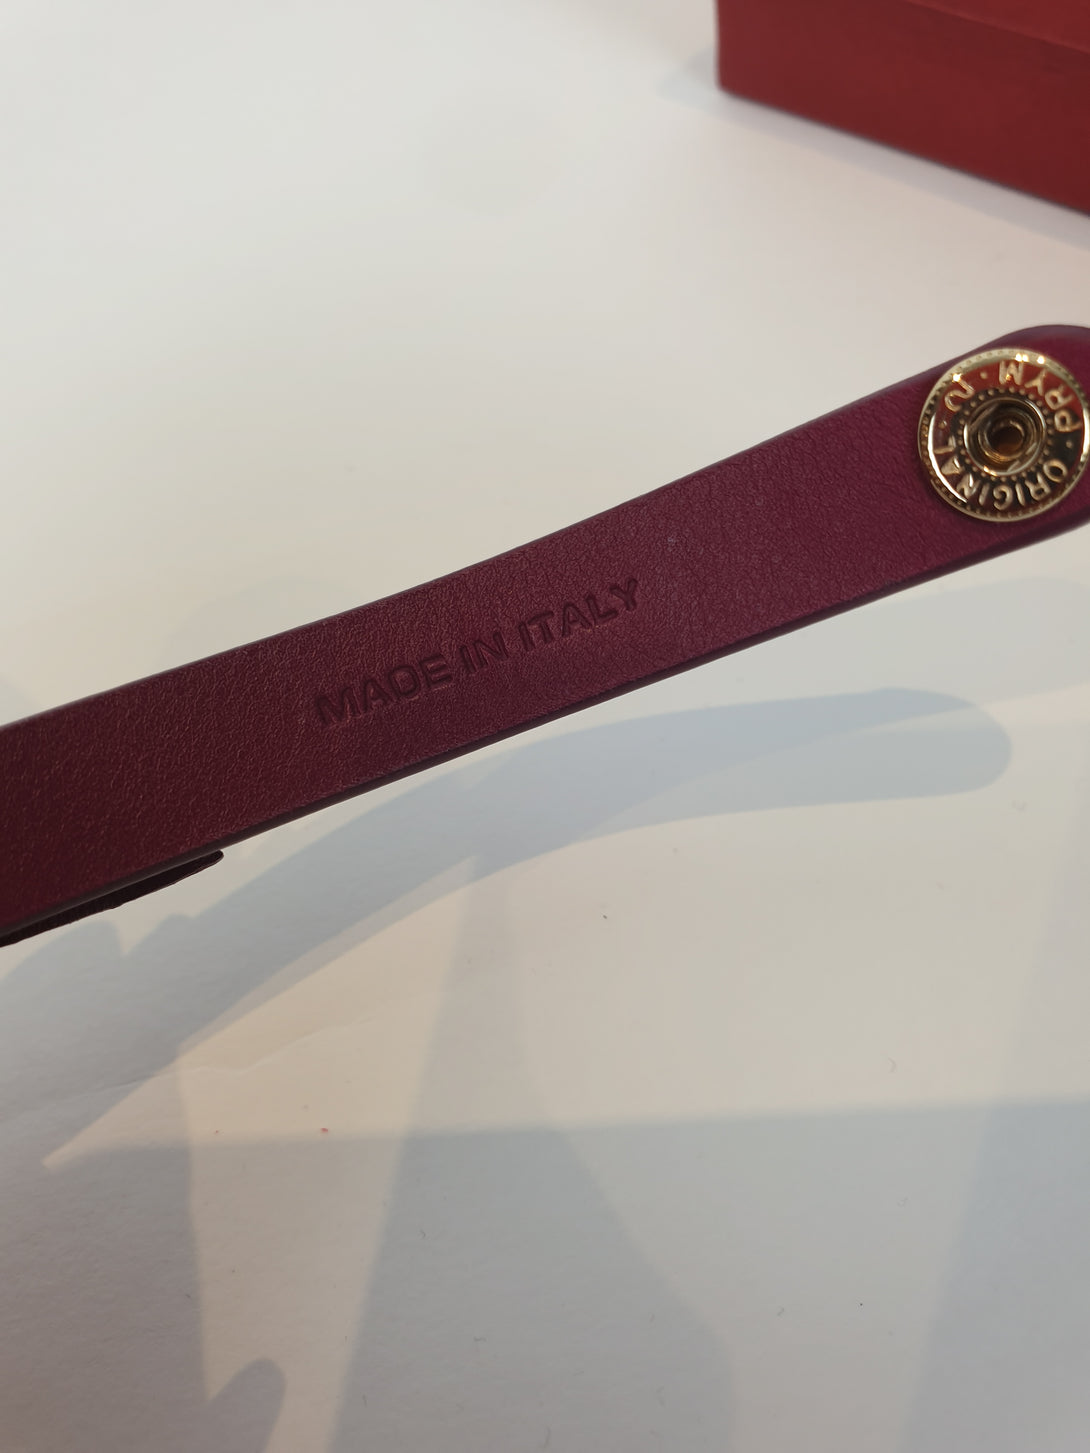 Salvatore Ferragamo Purple Bracelet - As seen on Instagram 5/08/20 - Siopaella Designer Exchange